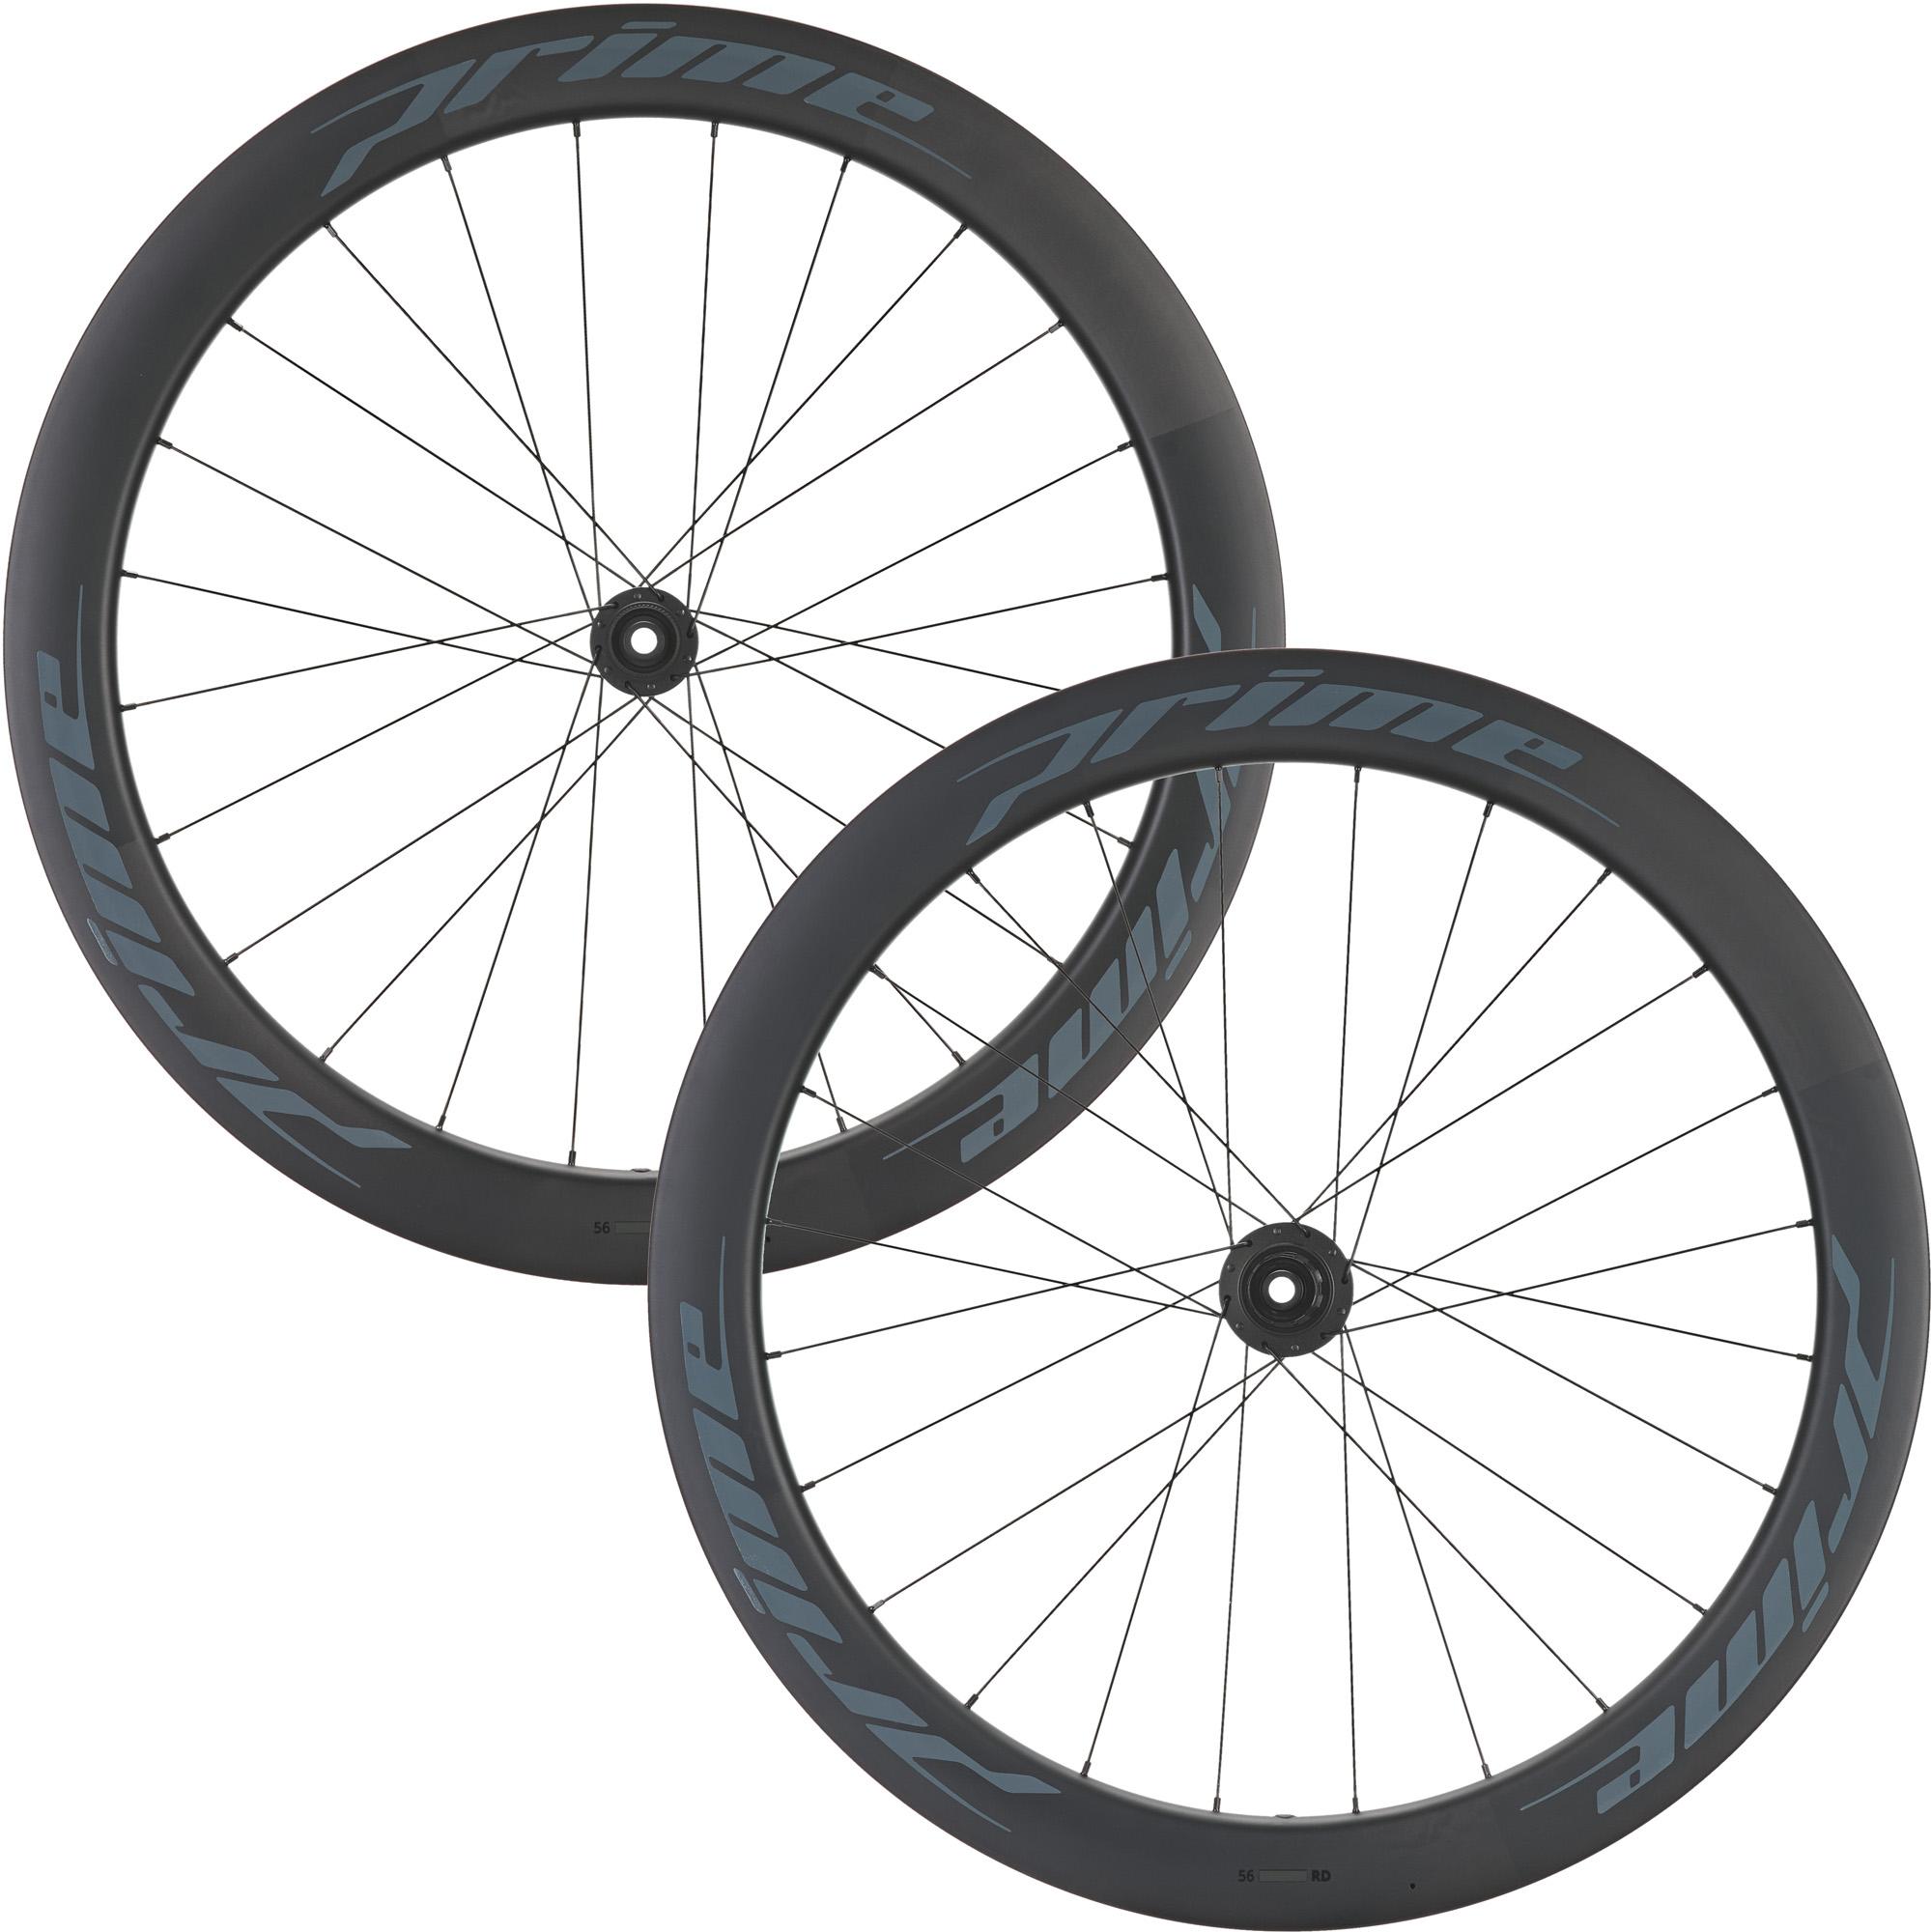 Prime Doyenne 56 Carbon Disc Wheelset - Black